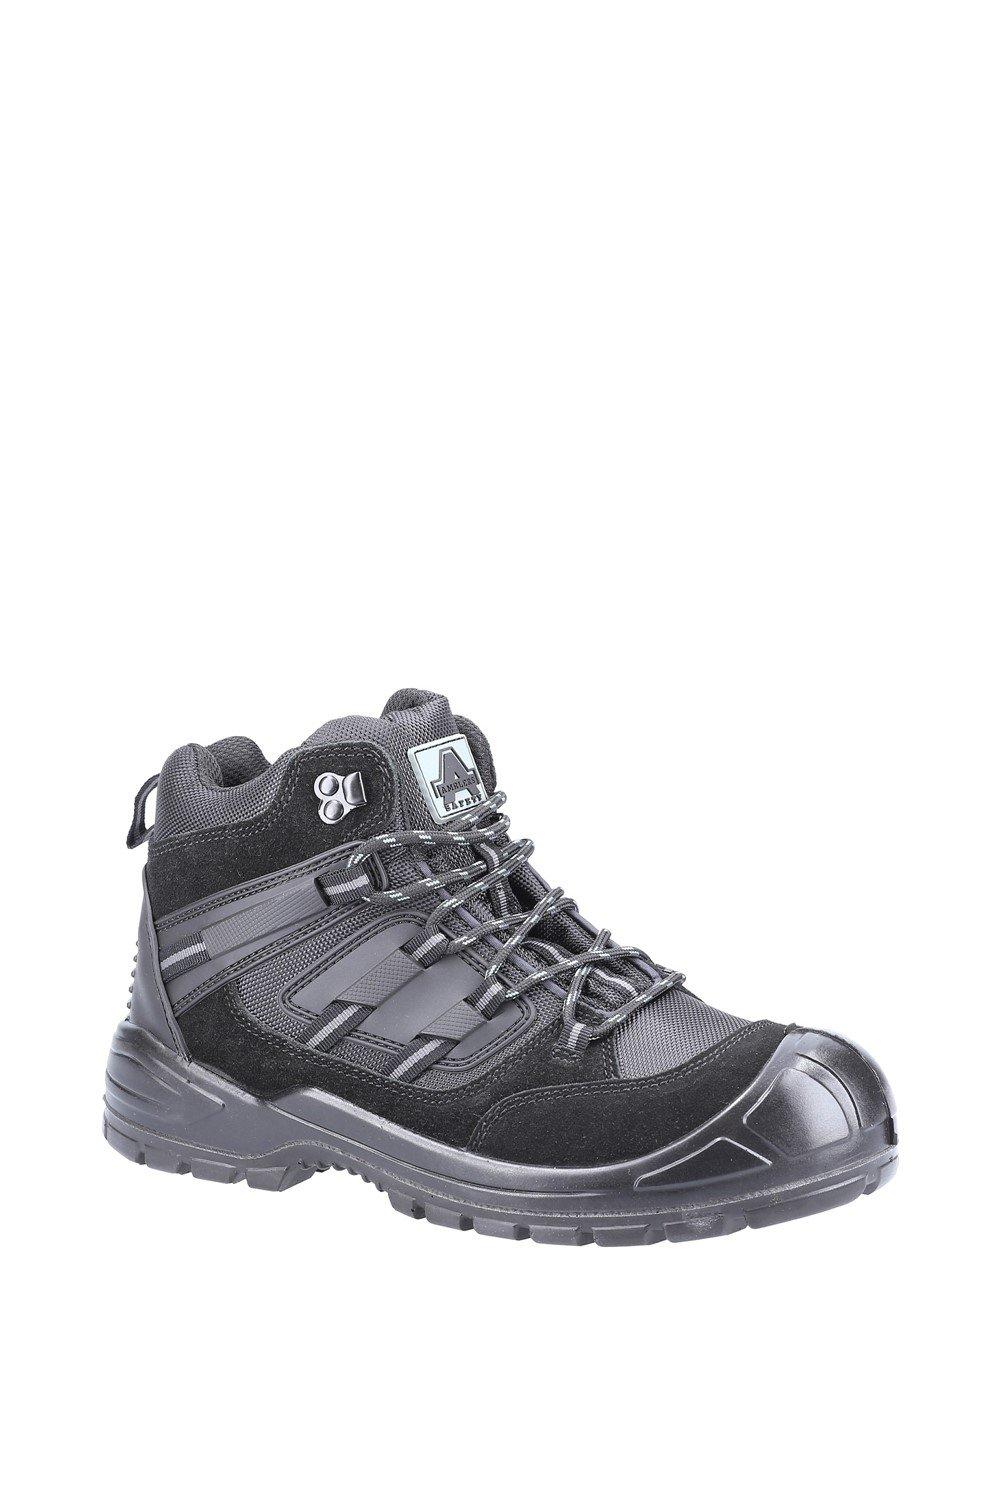 '257' Hiker Safety Footwear